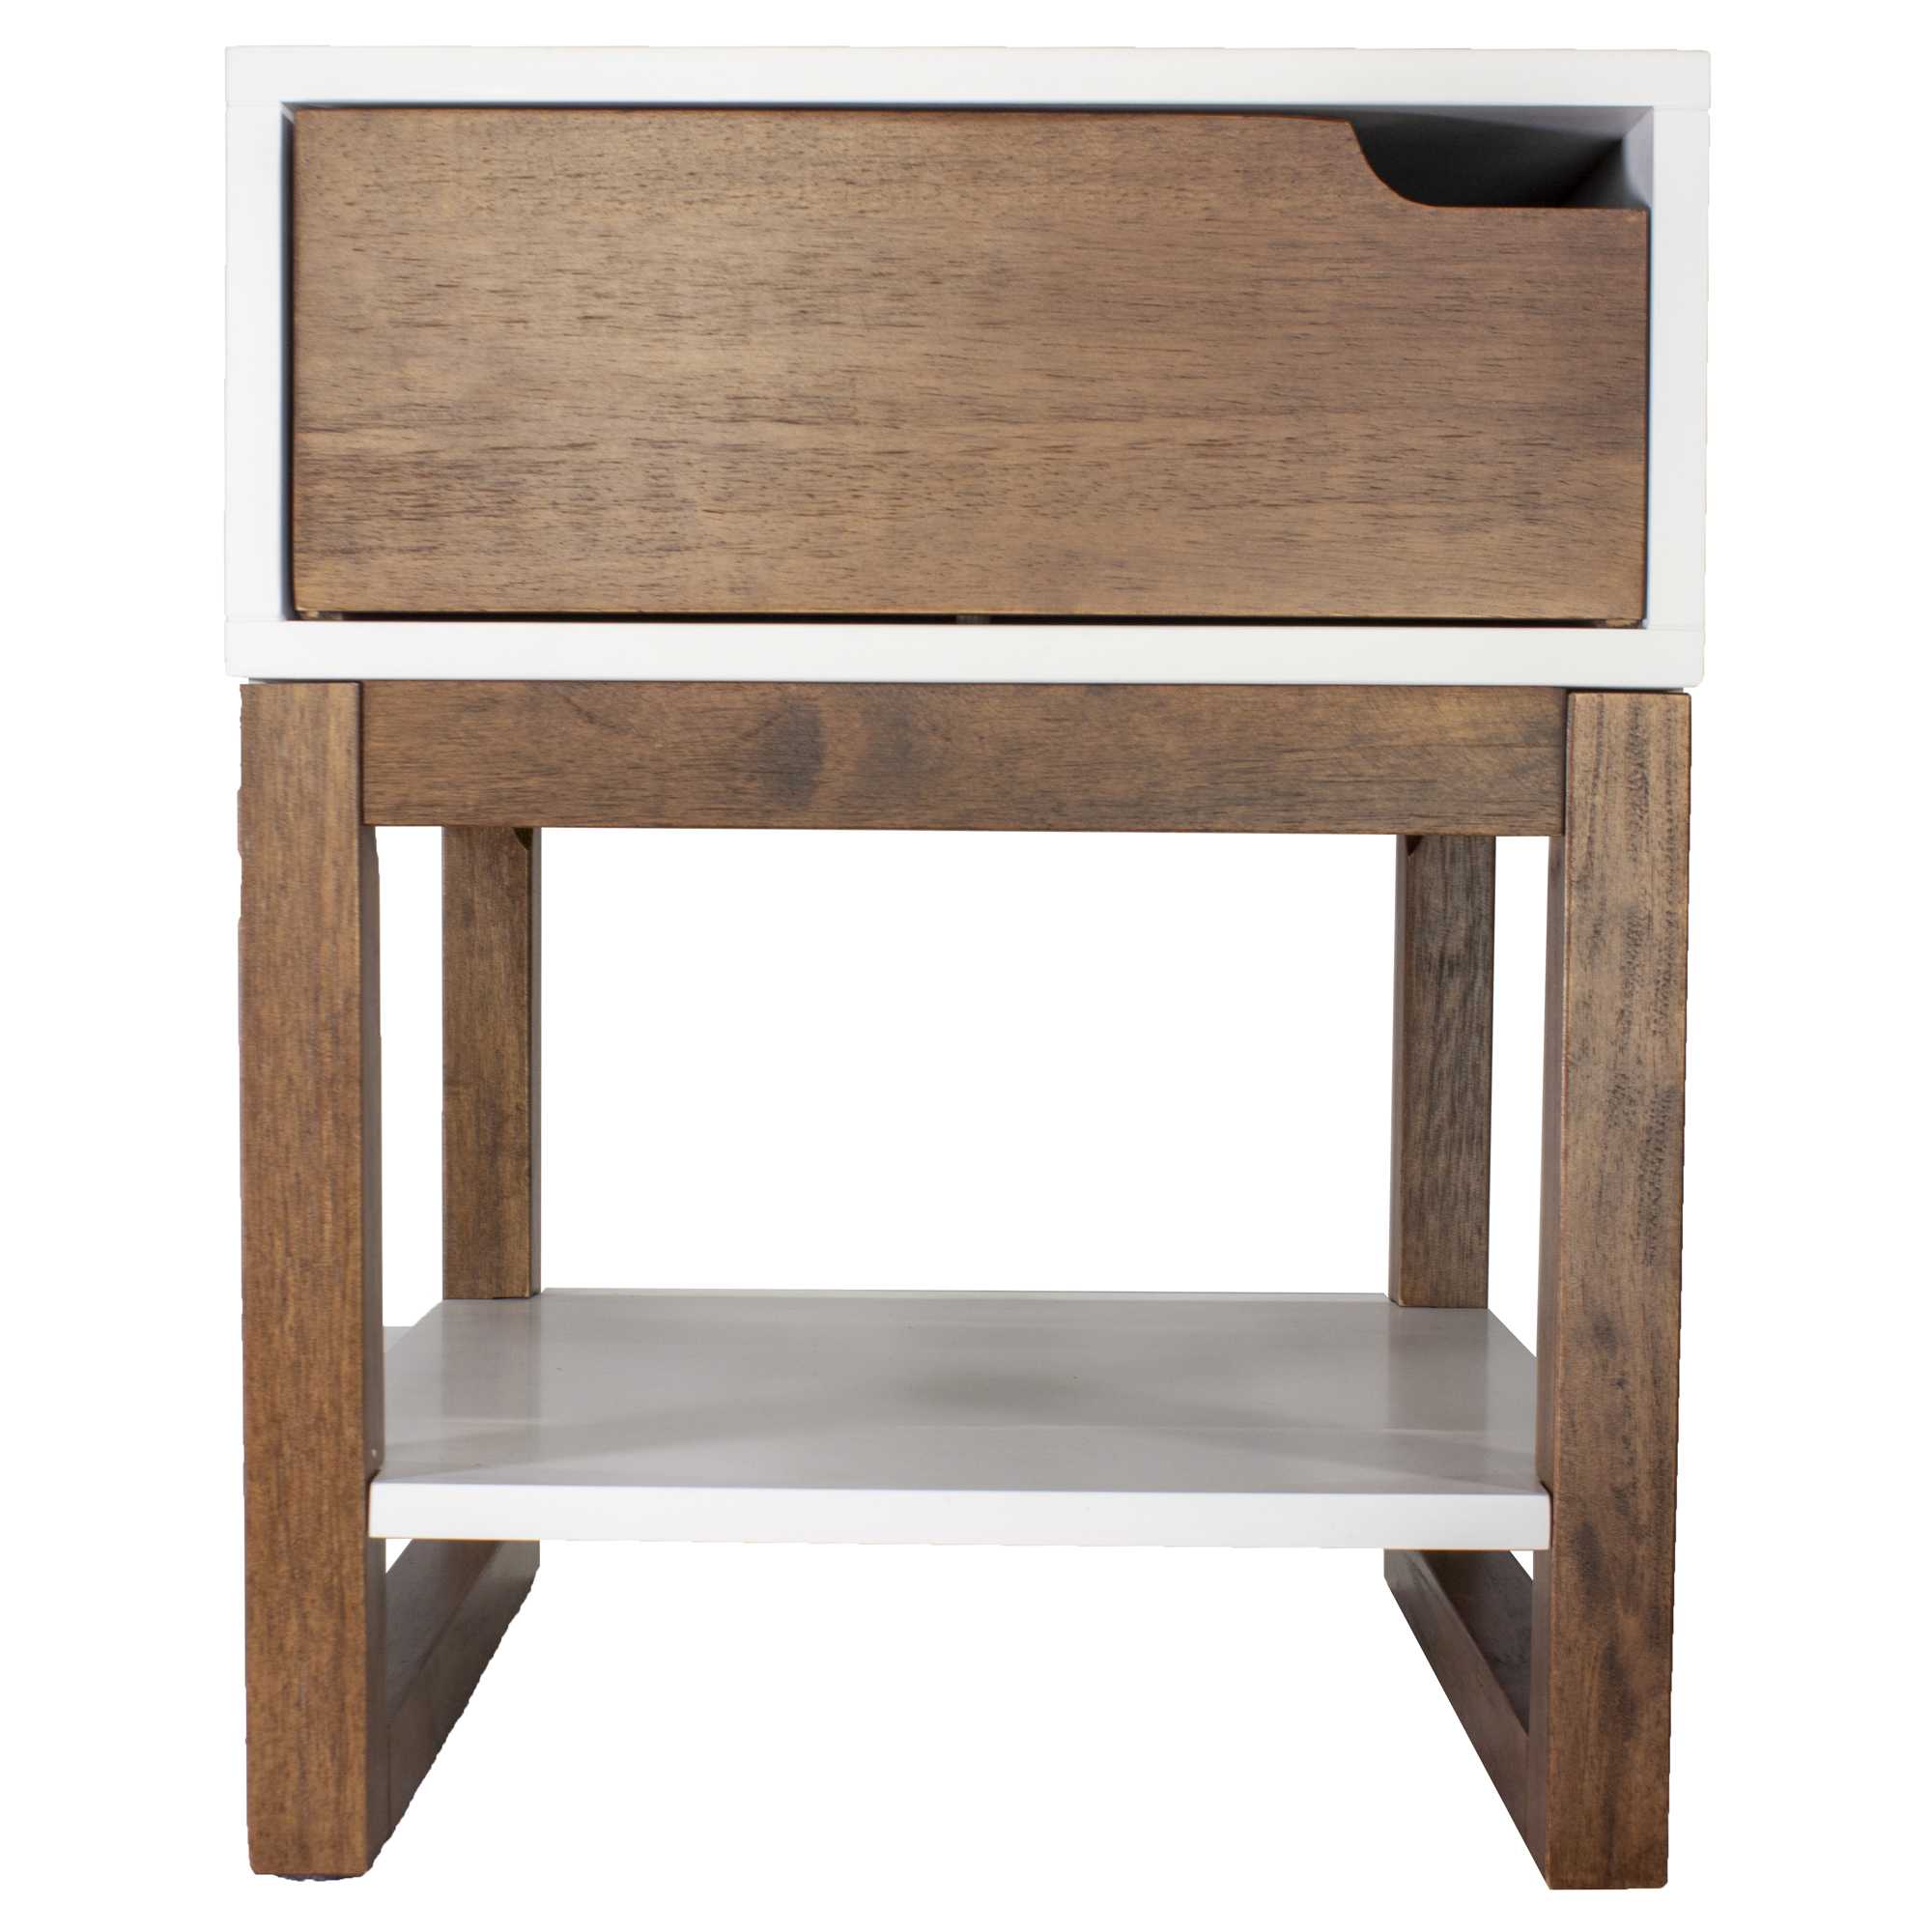 16" X 16" X 20" White & Mocha Solid Wood One Drawer Side Table w/ Shelf